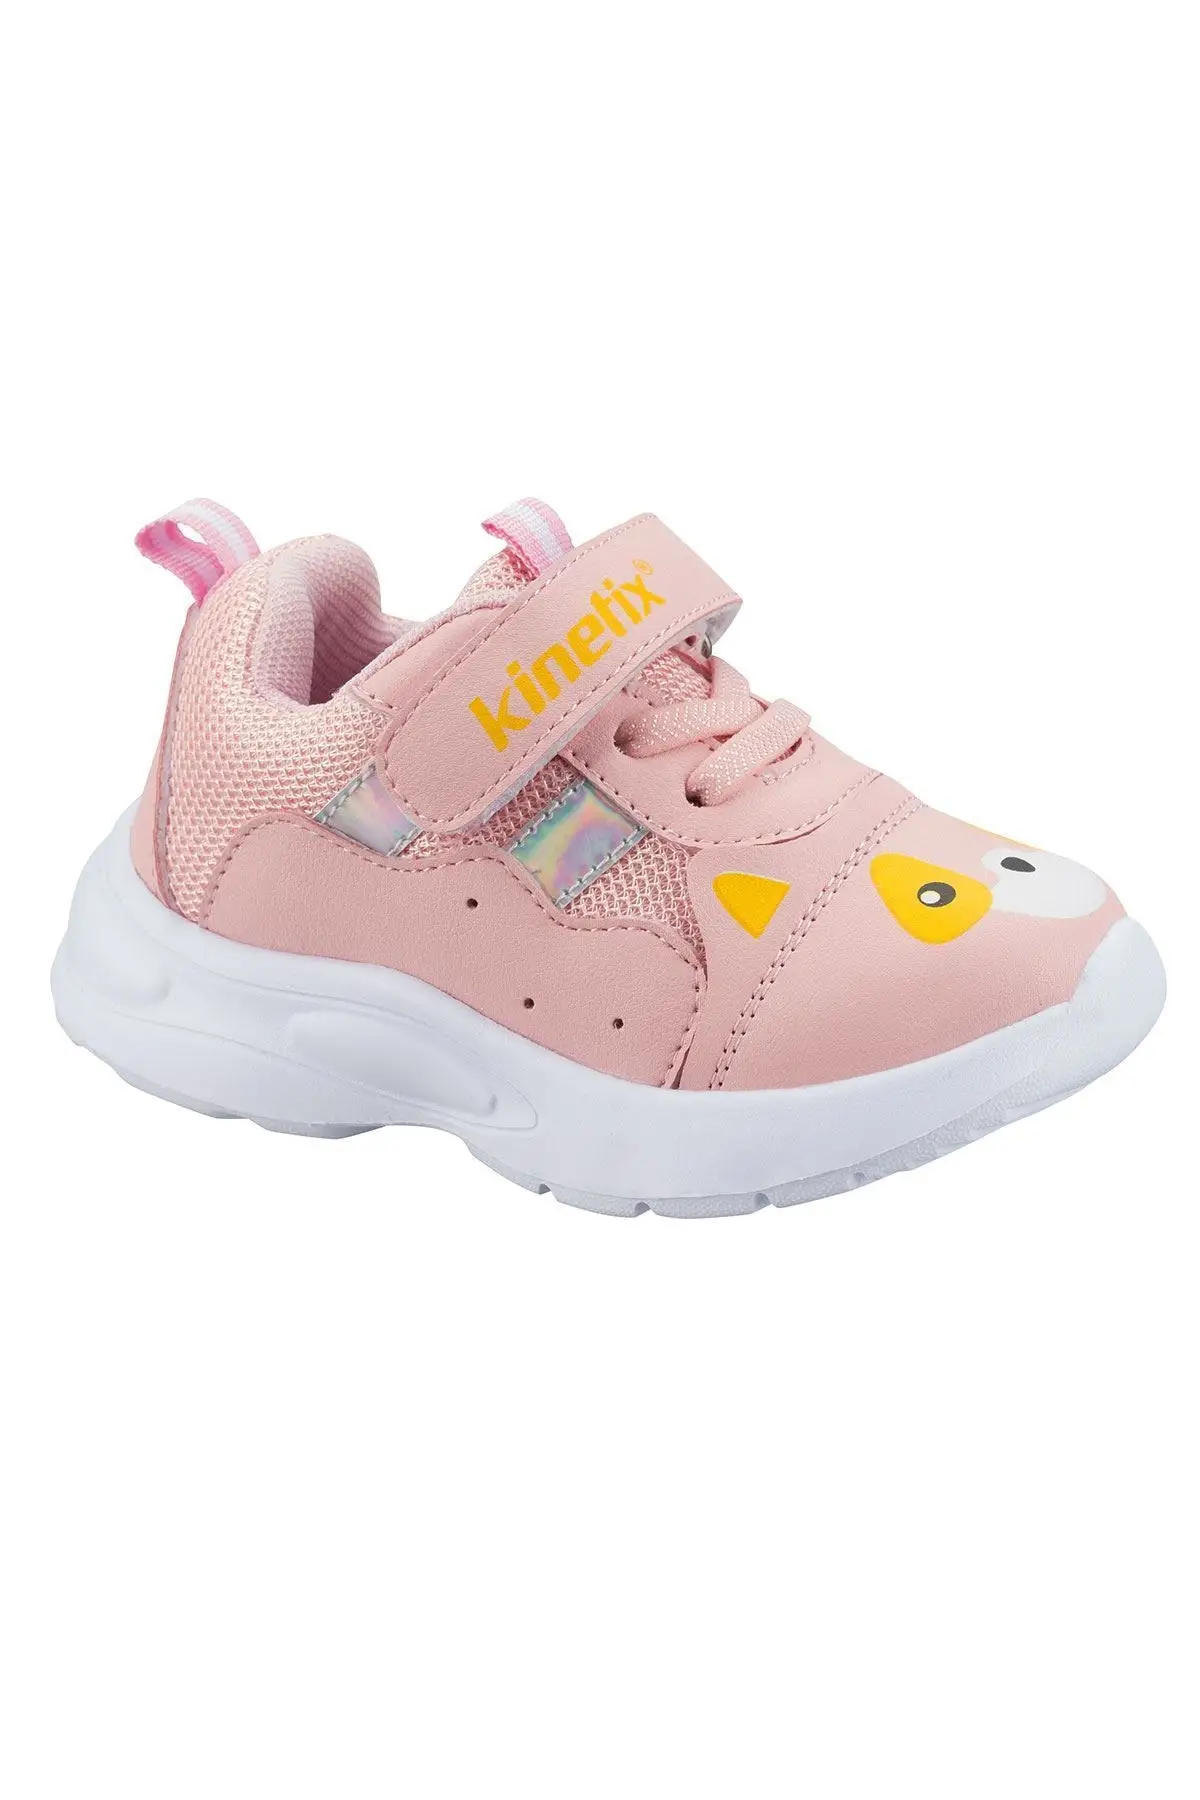 

SarEn Baby Female Child Sports Shoes As00556875 100606316 Toyz 1fx (Kinetix)